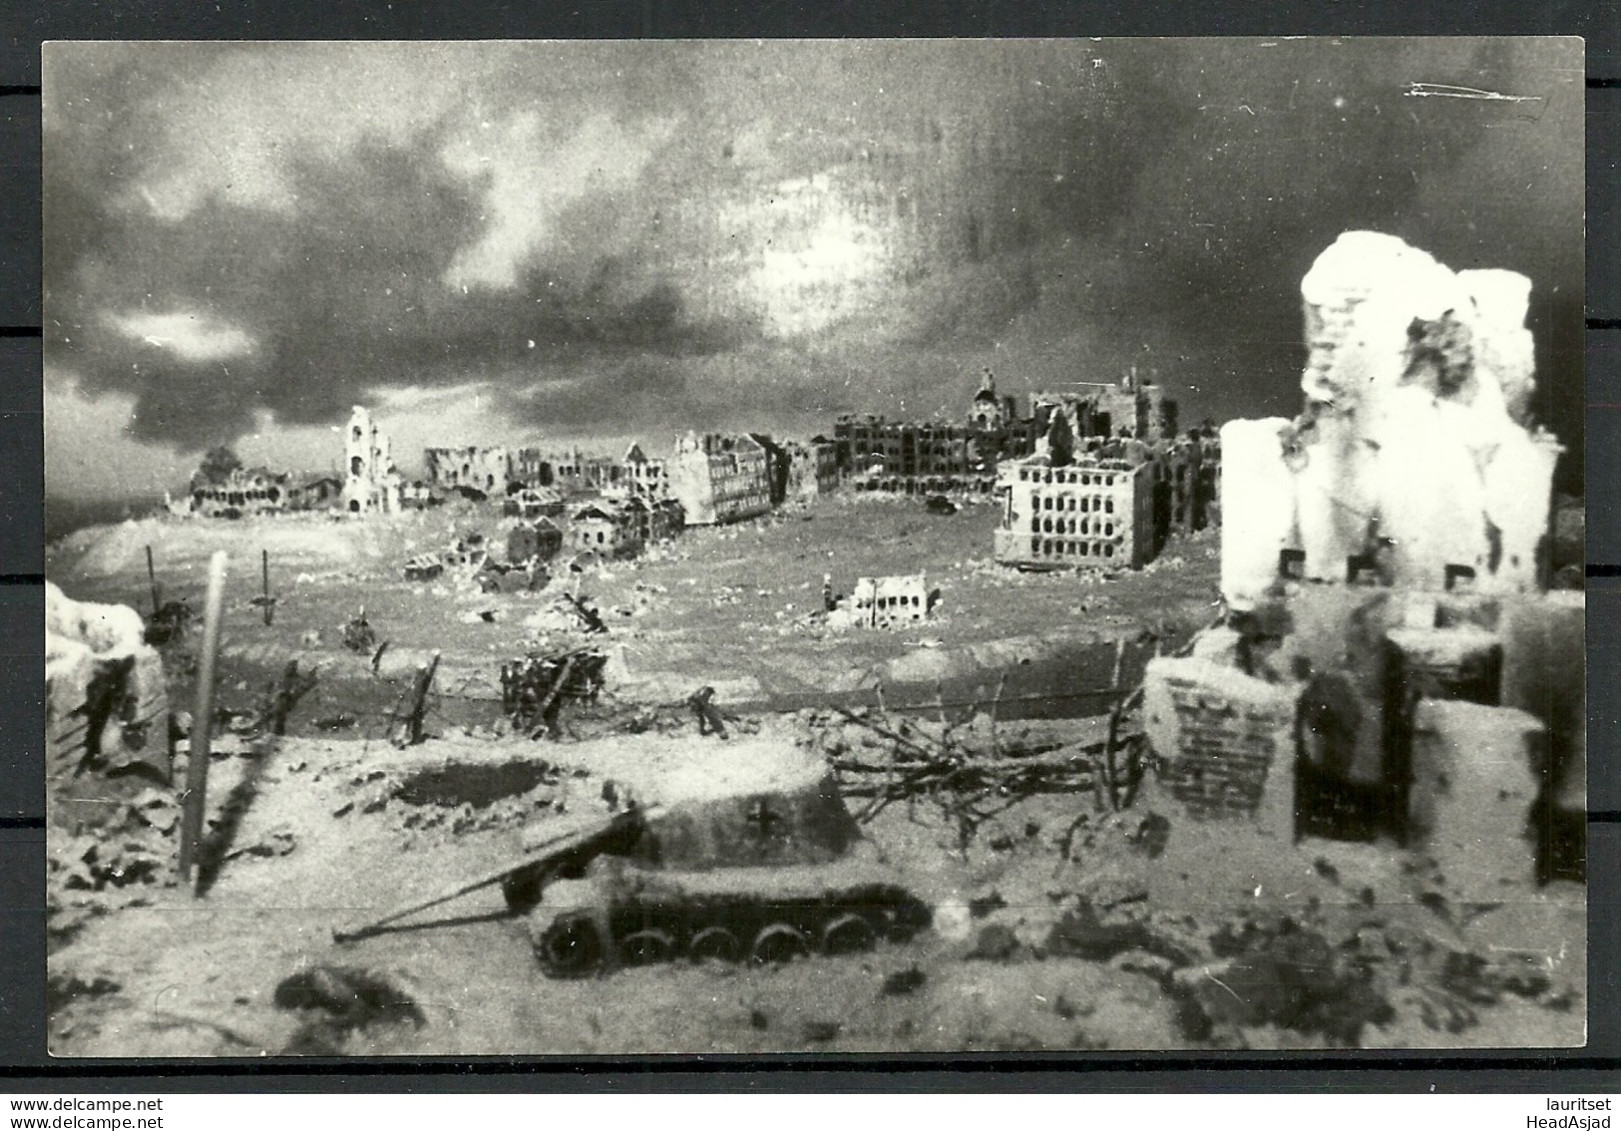 RUSSIA Russland Old Original Photofrapf 1943 WW II Volgograd ? Nach Der Schlacht The City After The Battle Tanks Etc. - Guerra, Militari